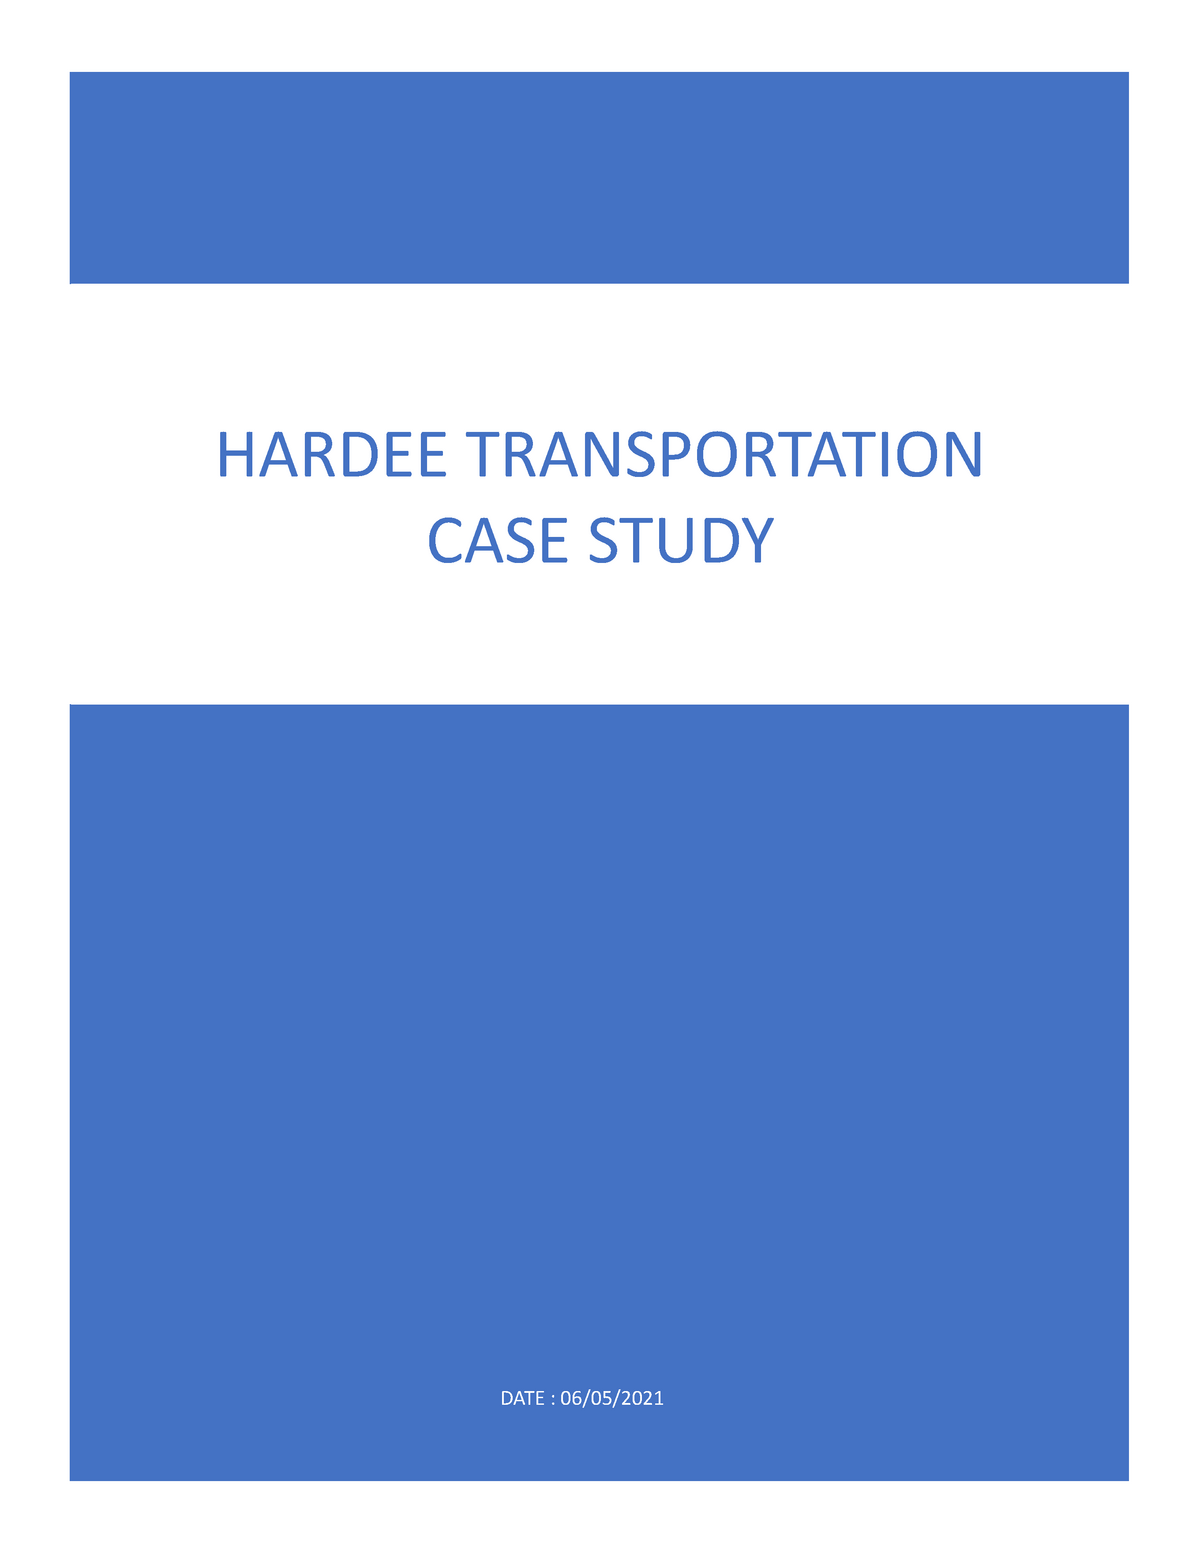 hardee transportation case study